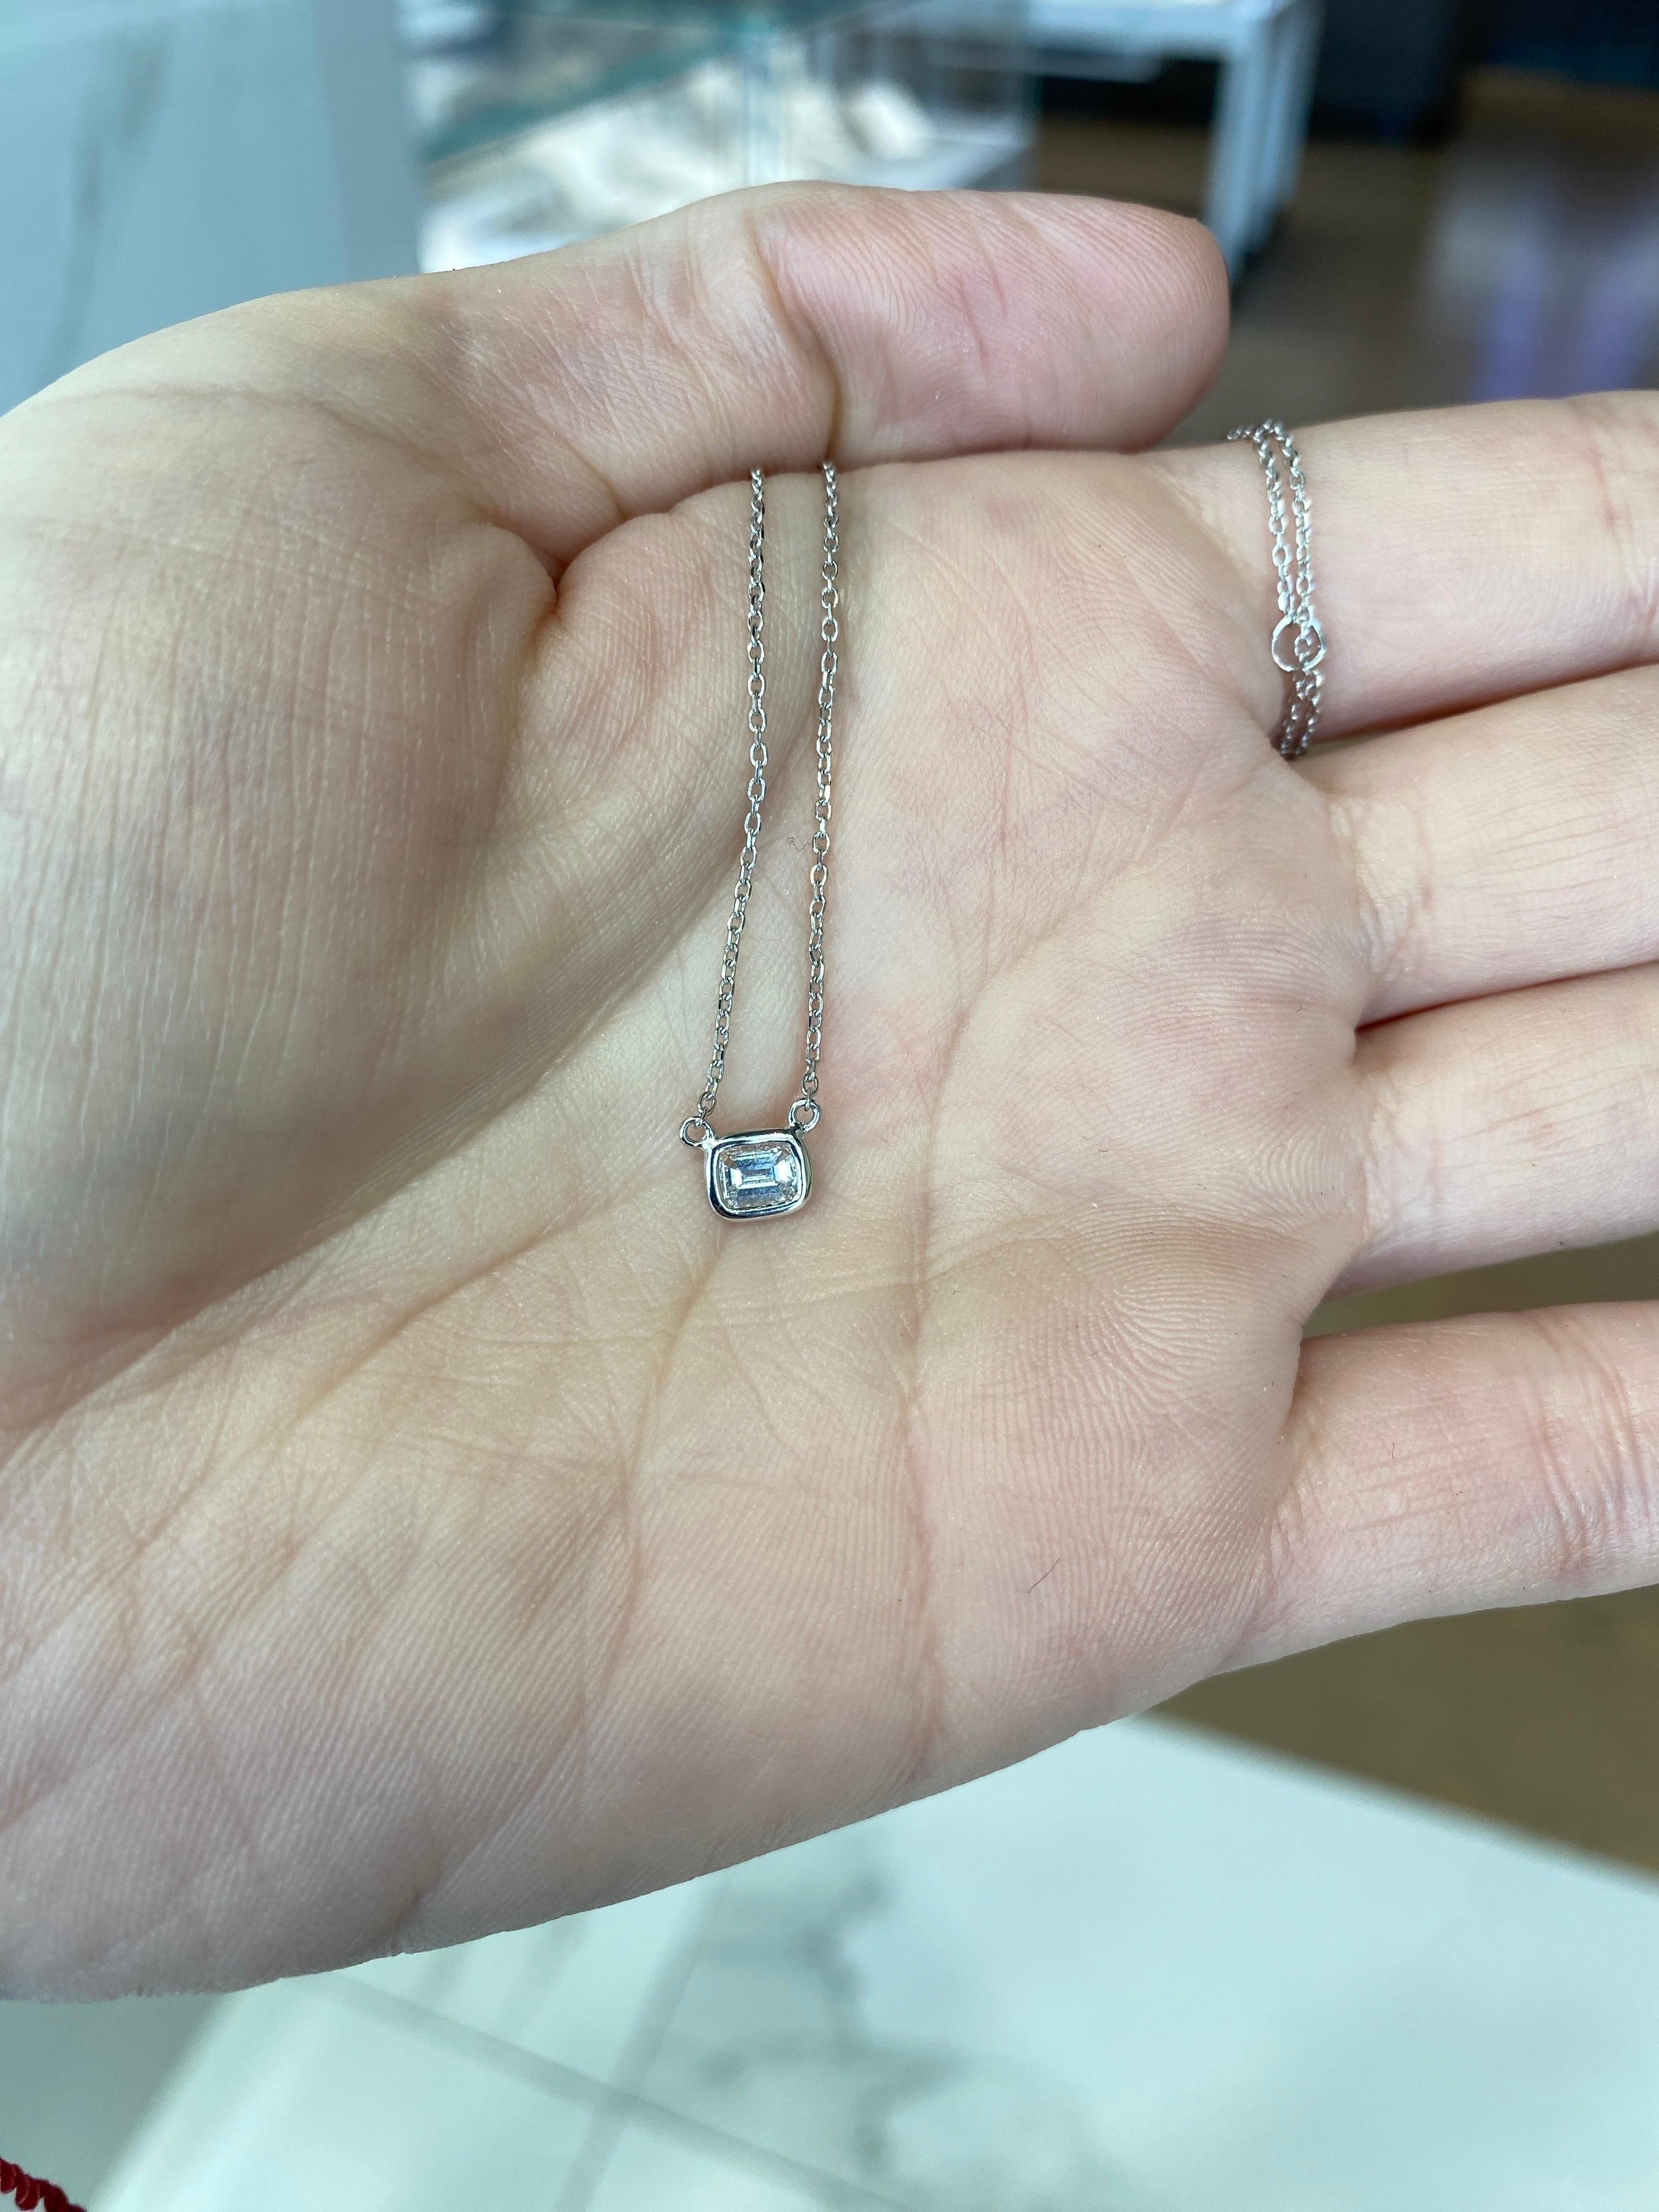 14k White Gold 0.23 Carat Natural Emerald Cut Diamond Pendant Necklace  For Sale 4